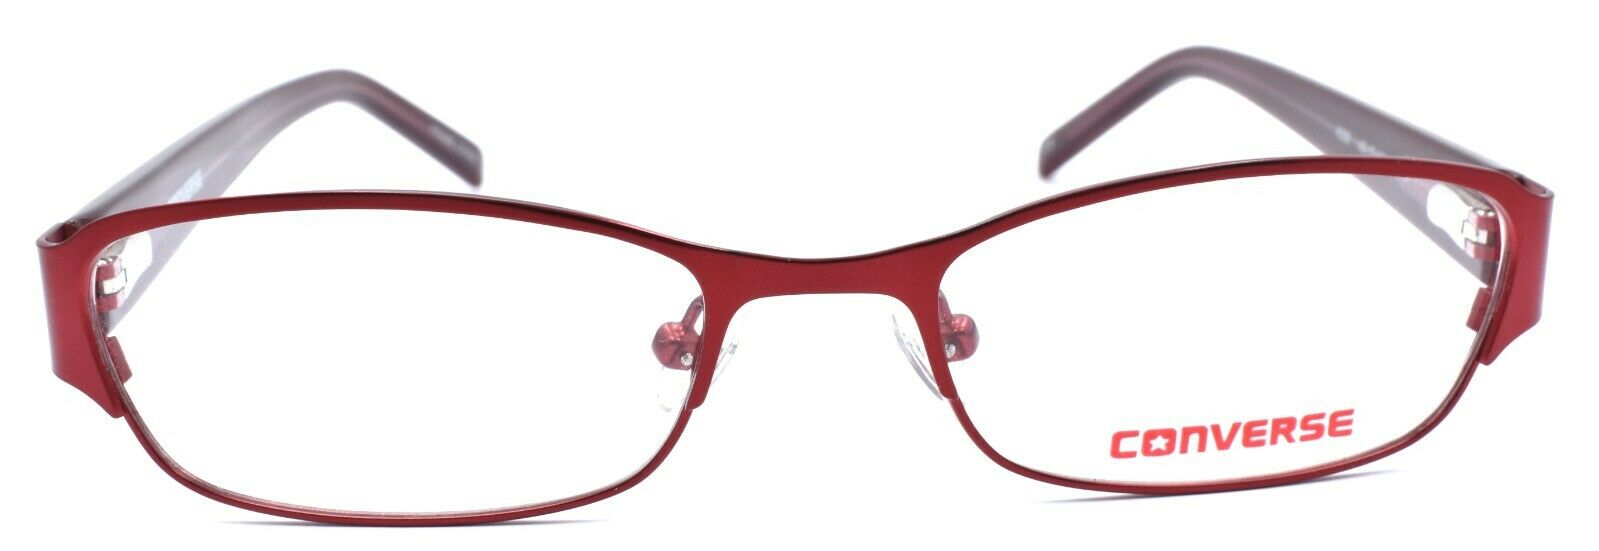 2-CONVERSE K006 Kids Girls Eyeglasses Frames 49-17-135 Red + CASE-751286247404-IKSpecs